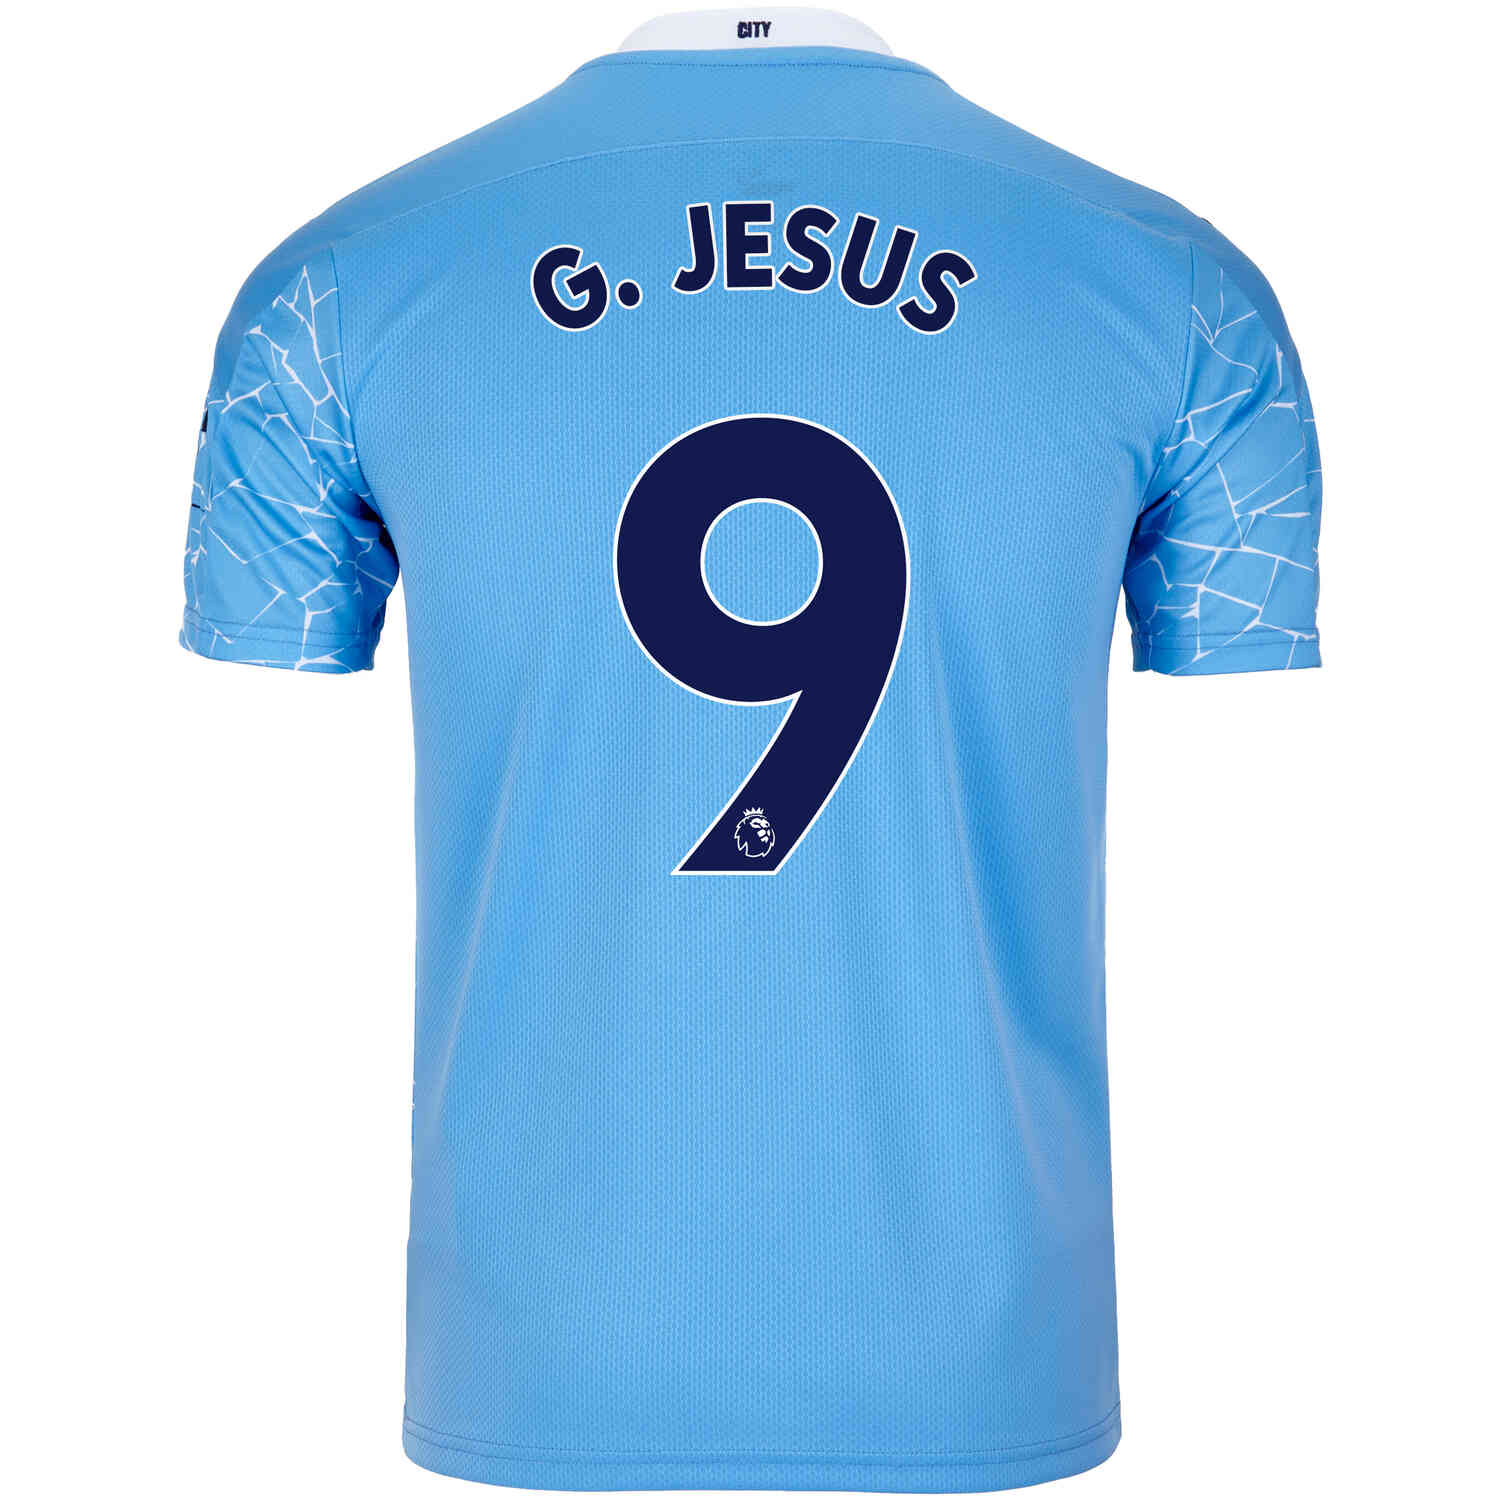 gabriel jesus jersey number